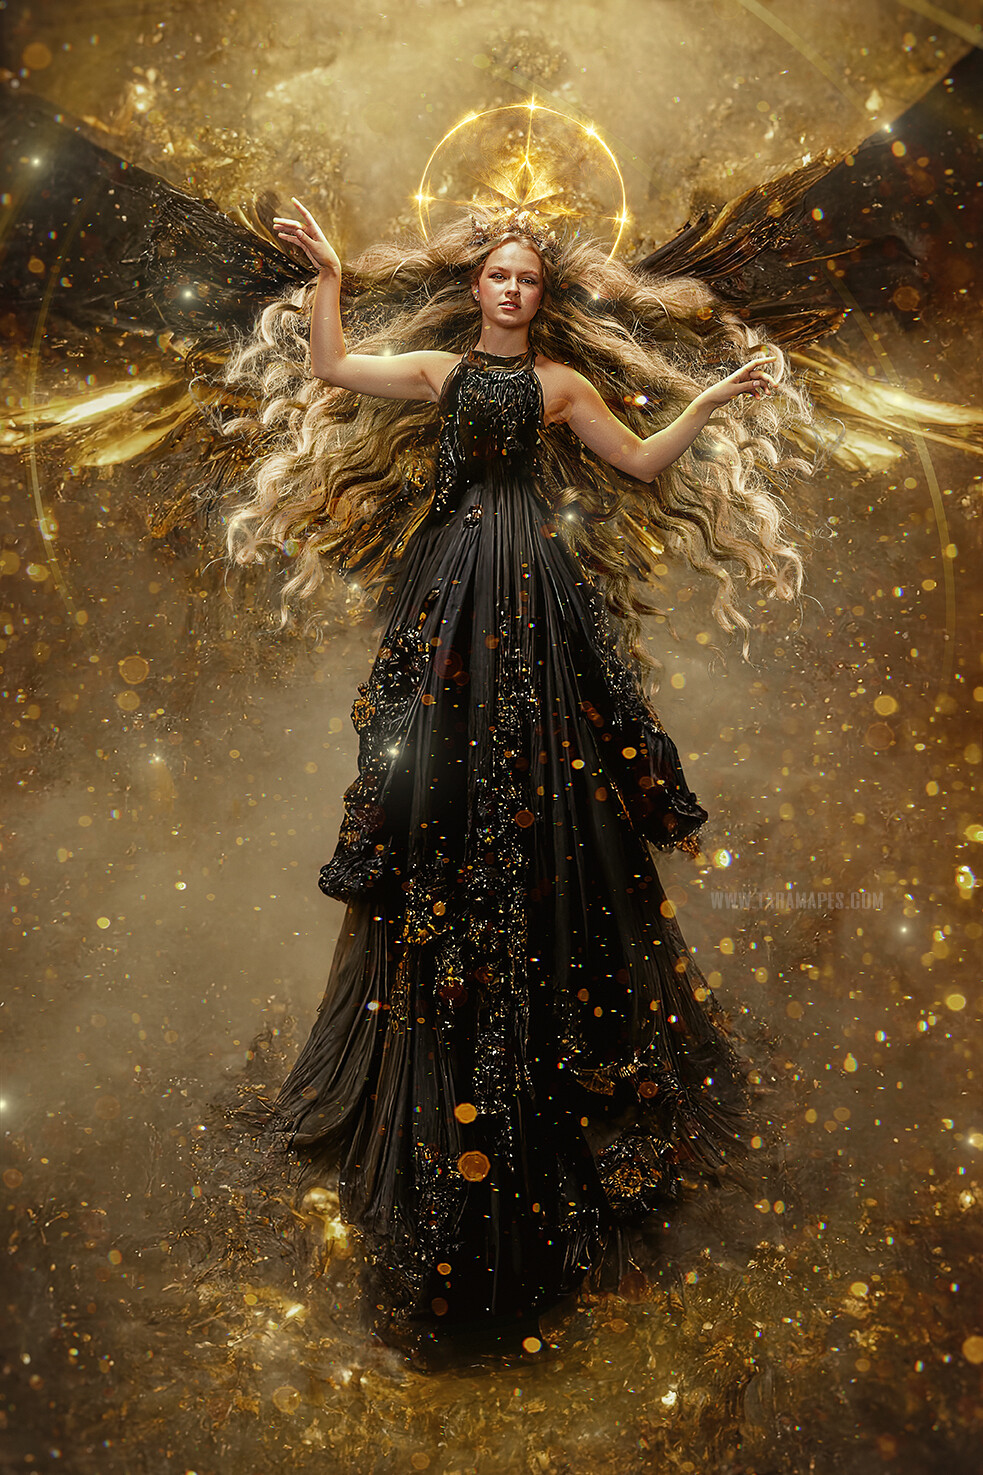 Dark Angel Digital Backdrop - AI Angel Body in Black Gown with Wings - Glowing Celestial Heavenly Angel Body with Gold Wings Digital  - JPG File Digital Background